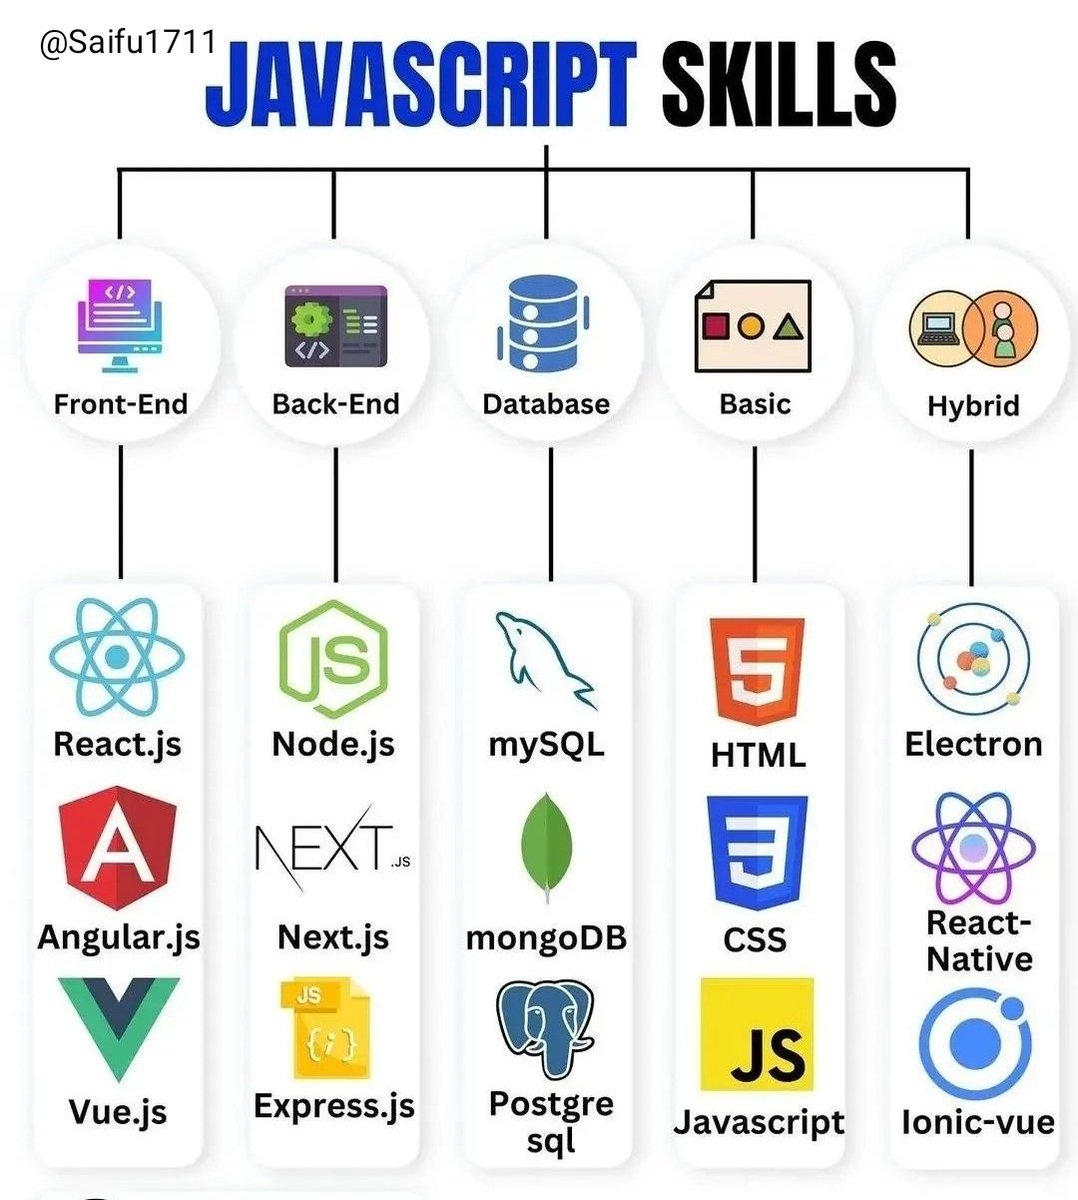 Why JavaScript is widely used.... 

#javascript #Java #development #javaquiz #Google #developers #webdevelopment #websites #Webdesign #Facebook #Amazon